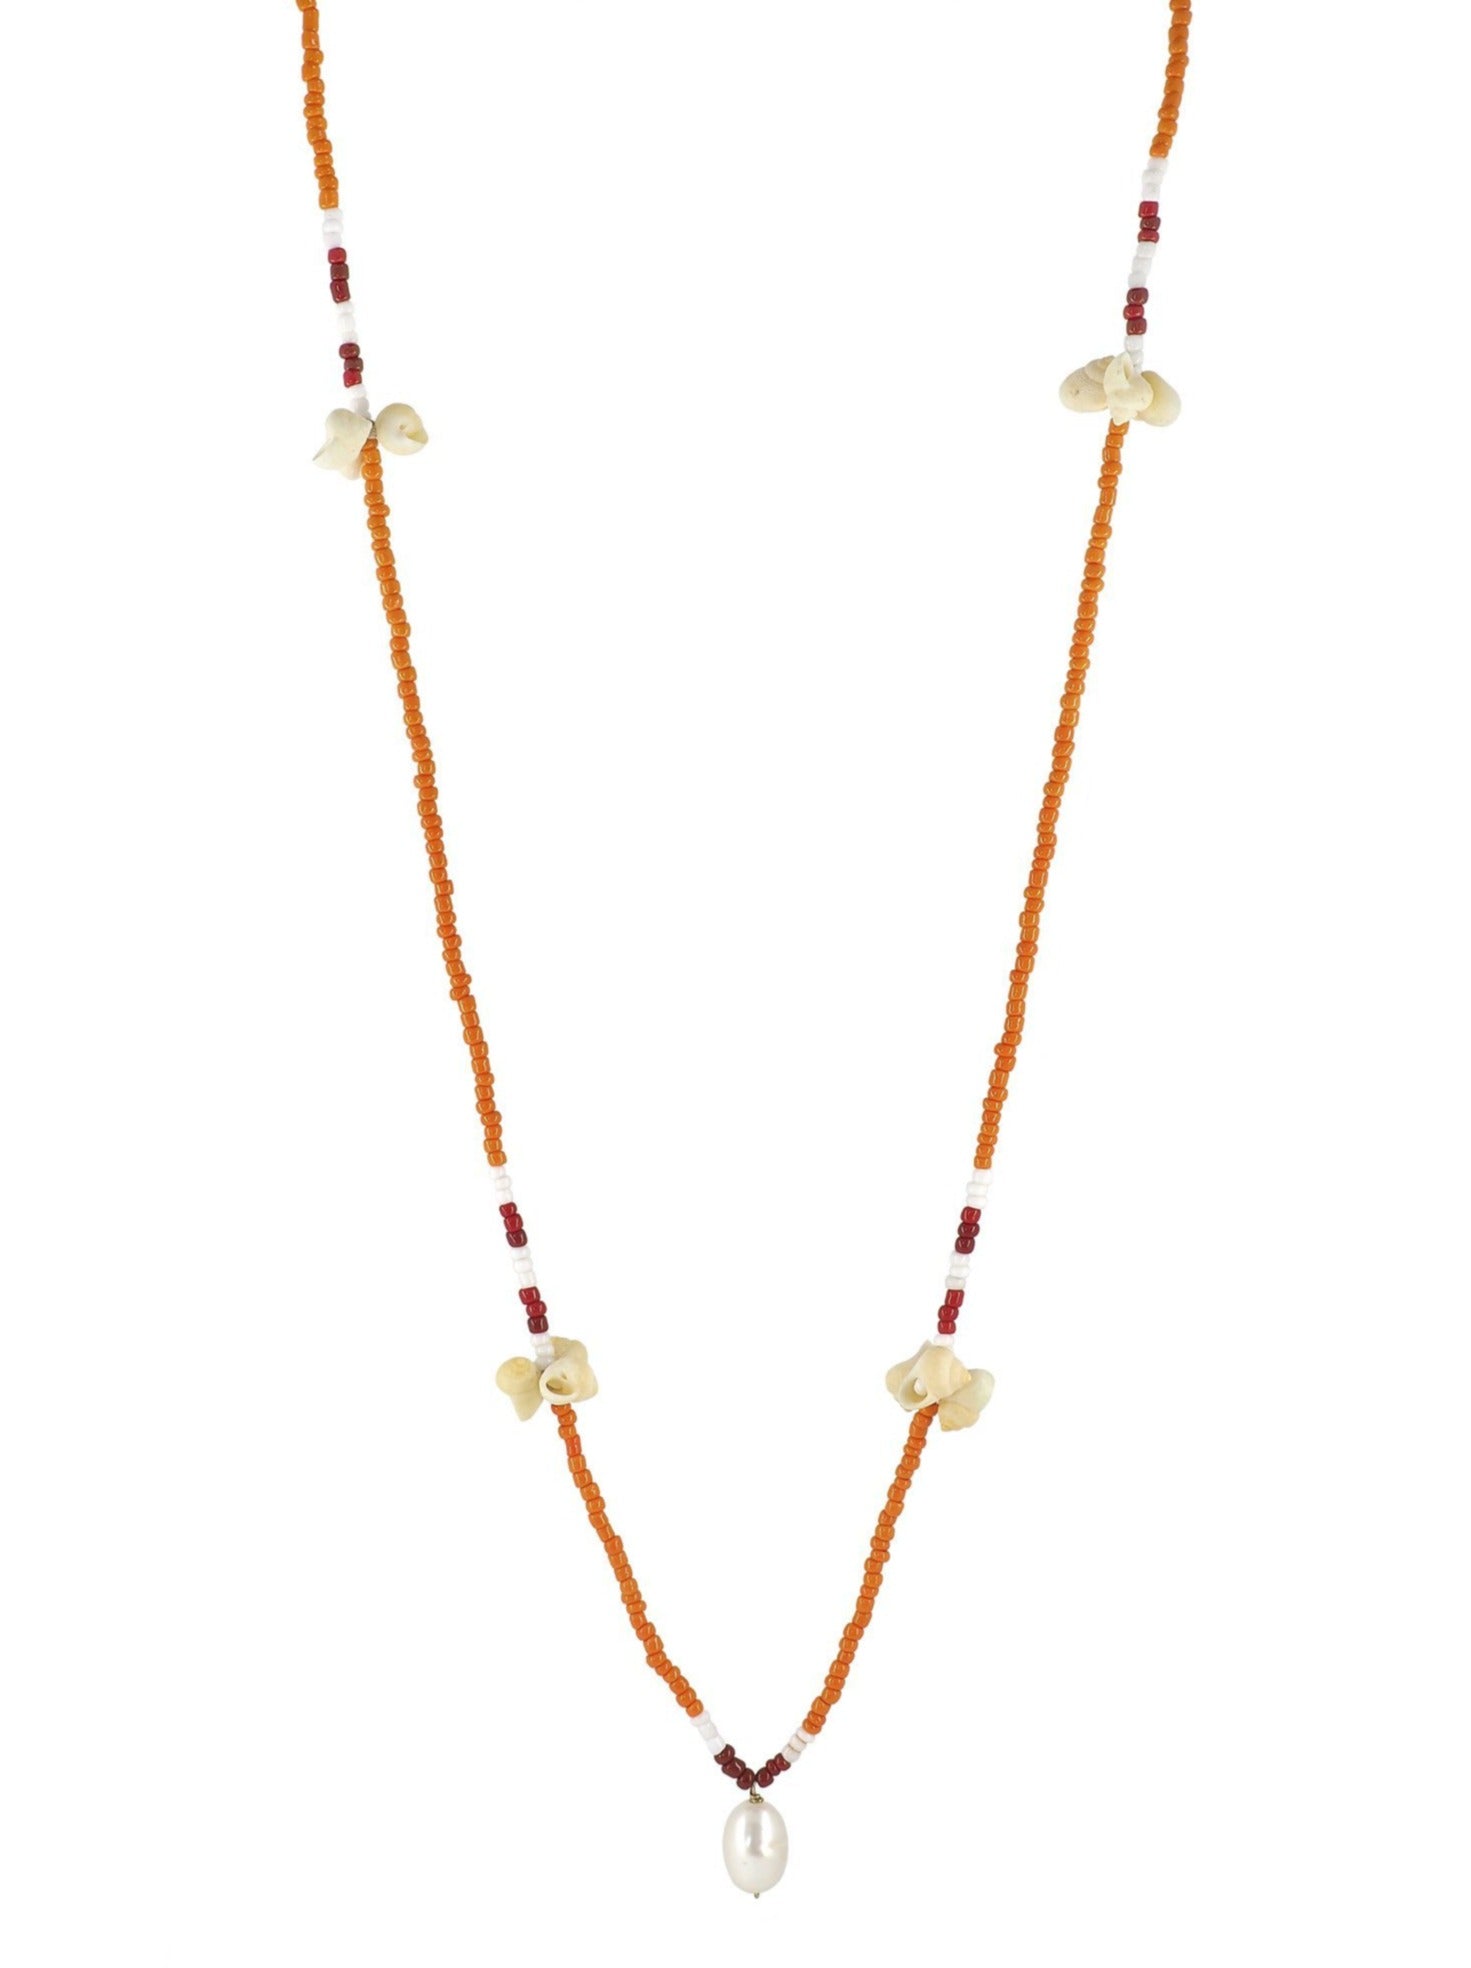 Beaded Necklace Orange, Sea Shells, Pearl, Gender Neutral